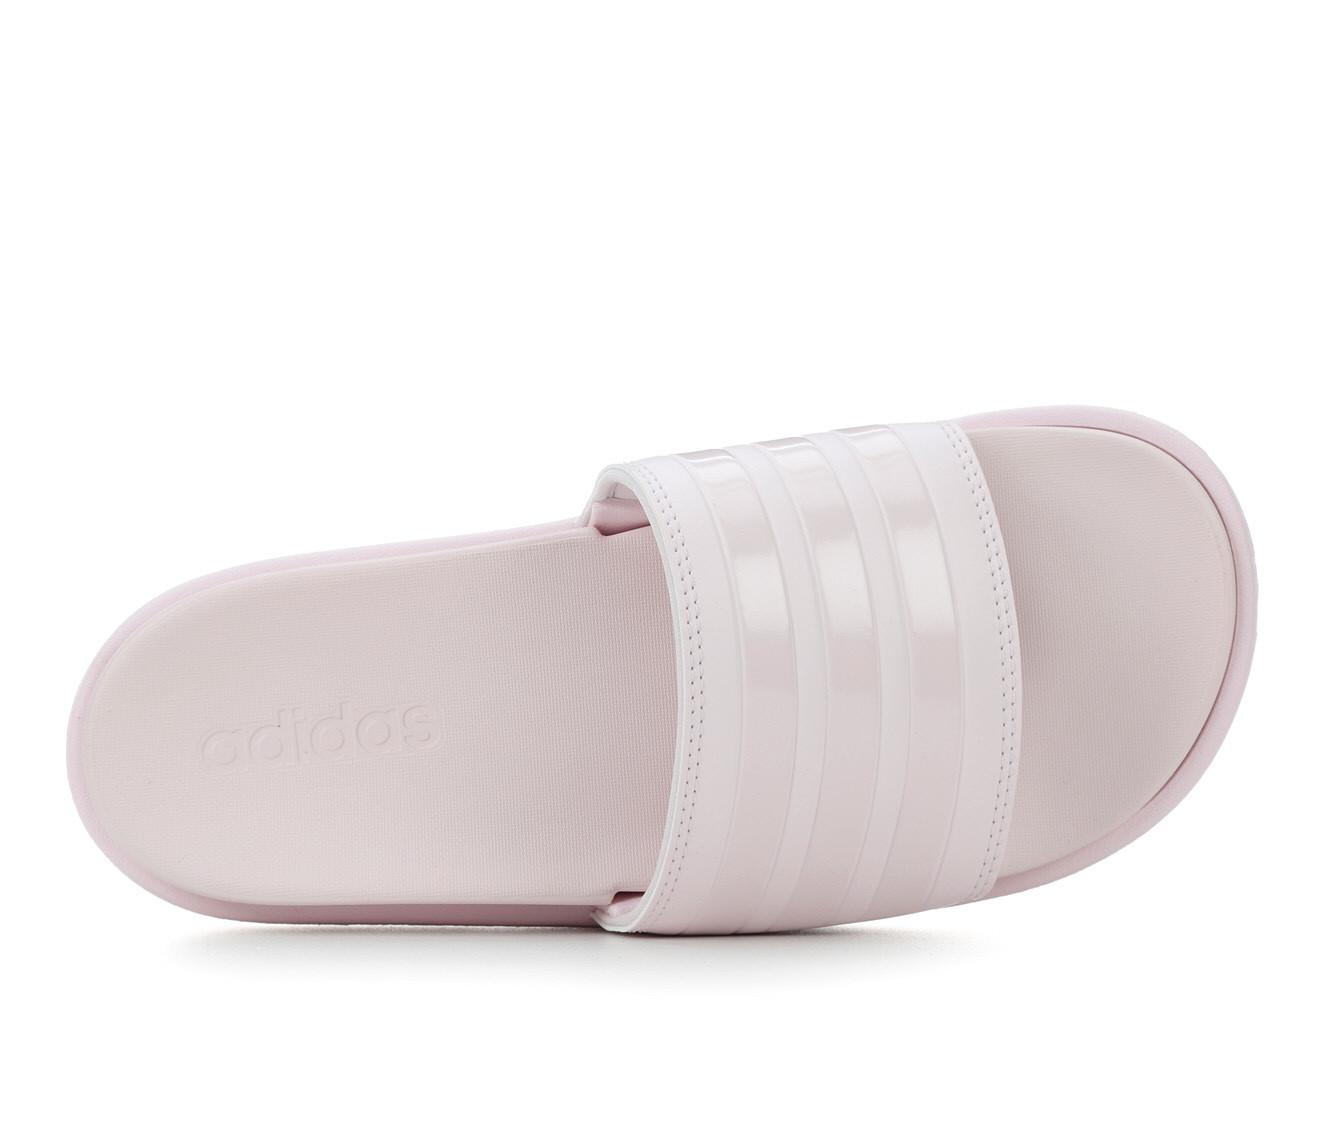 adidas Adilette Platform Slides - White, Women's Lifestyle